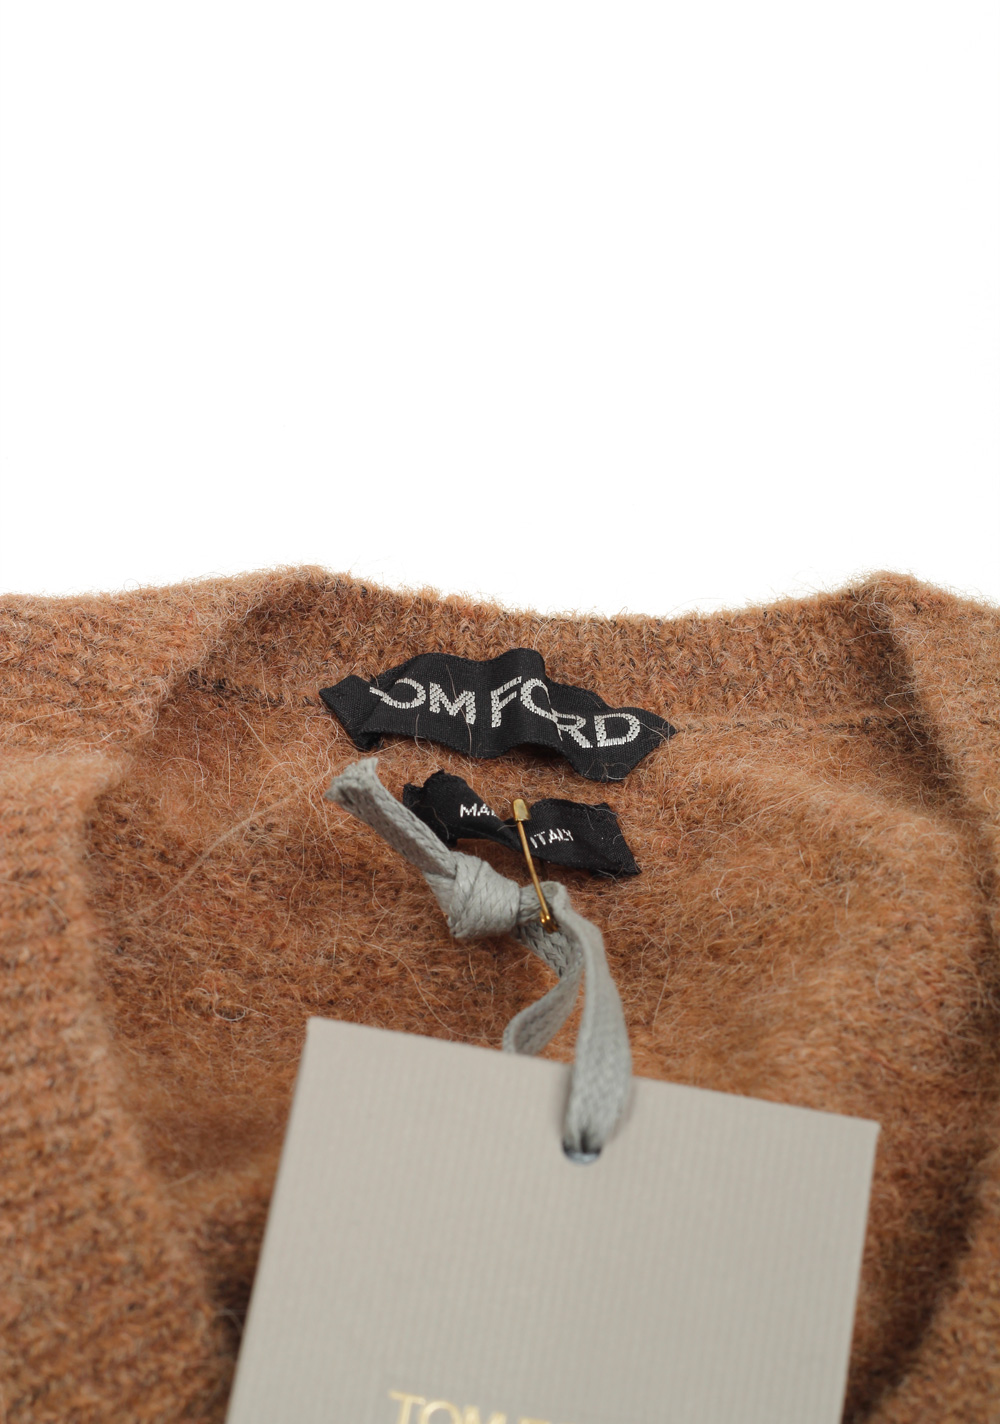 TOM FORD Brown V Neck Sweater Size 48 / 38R U.S. In Alpaca Blend | Costume Limité